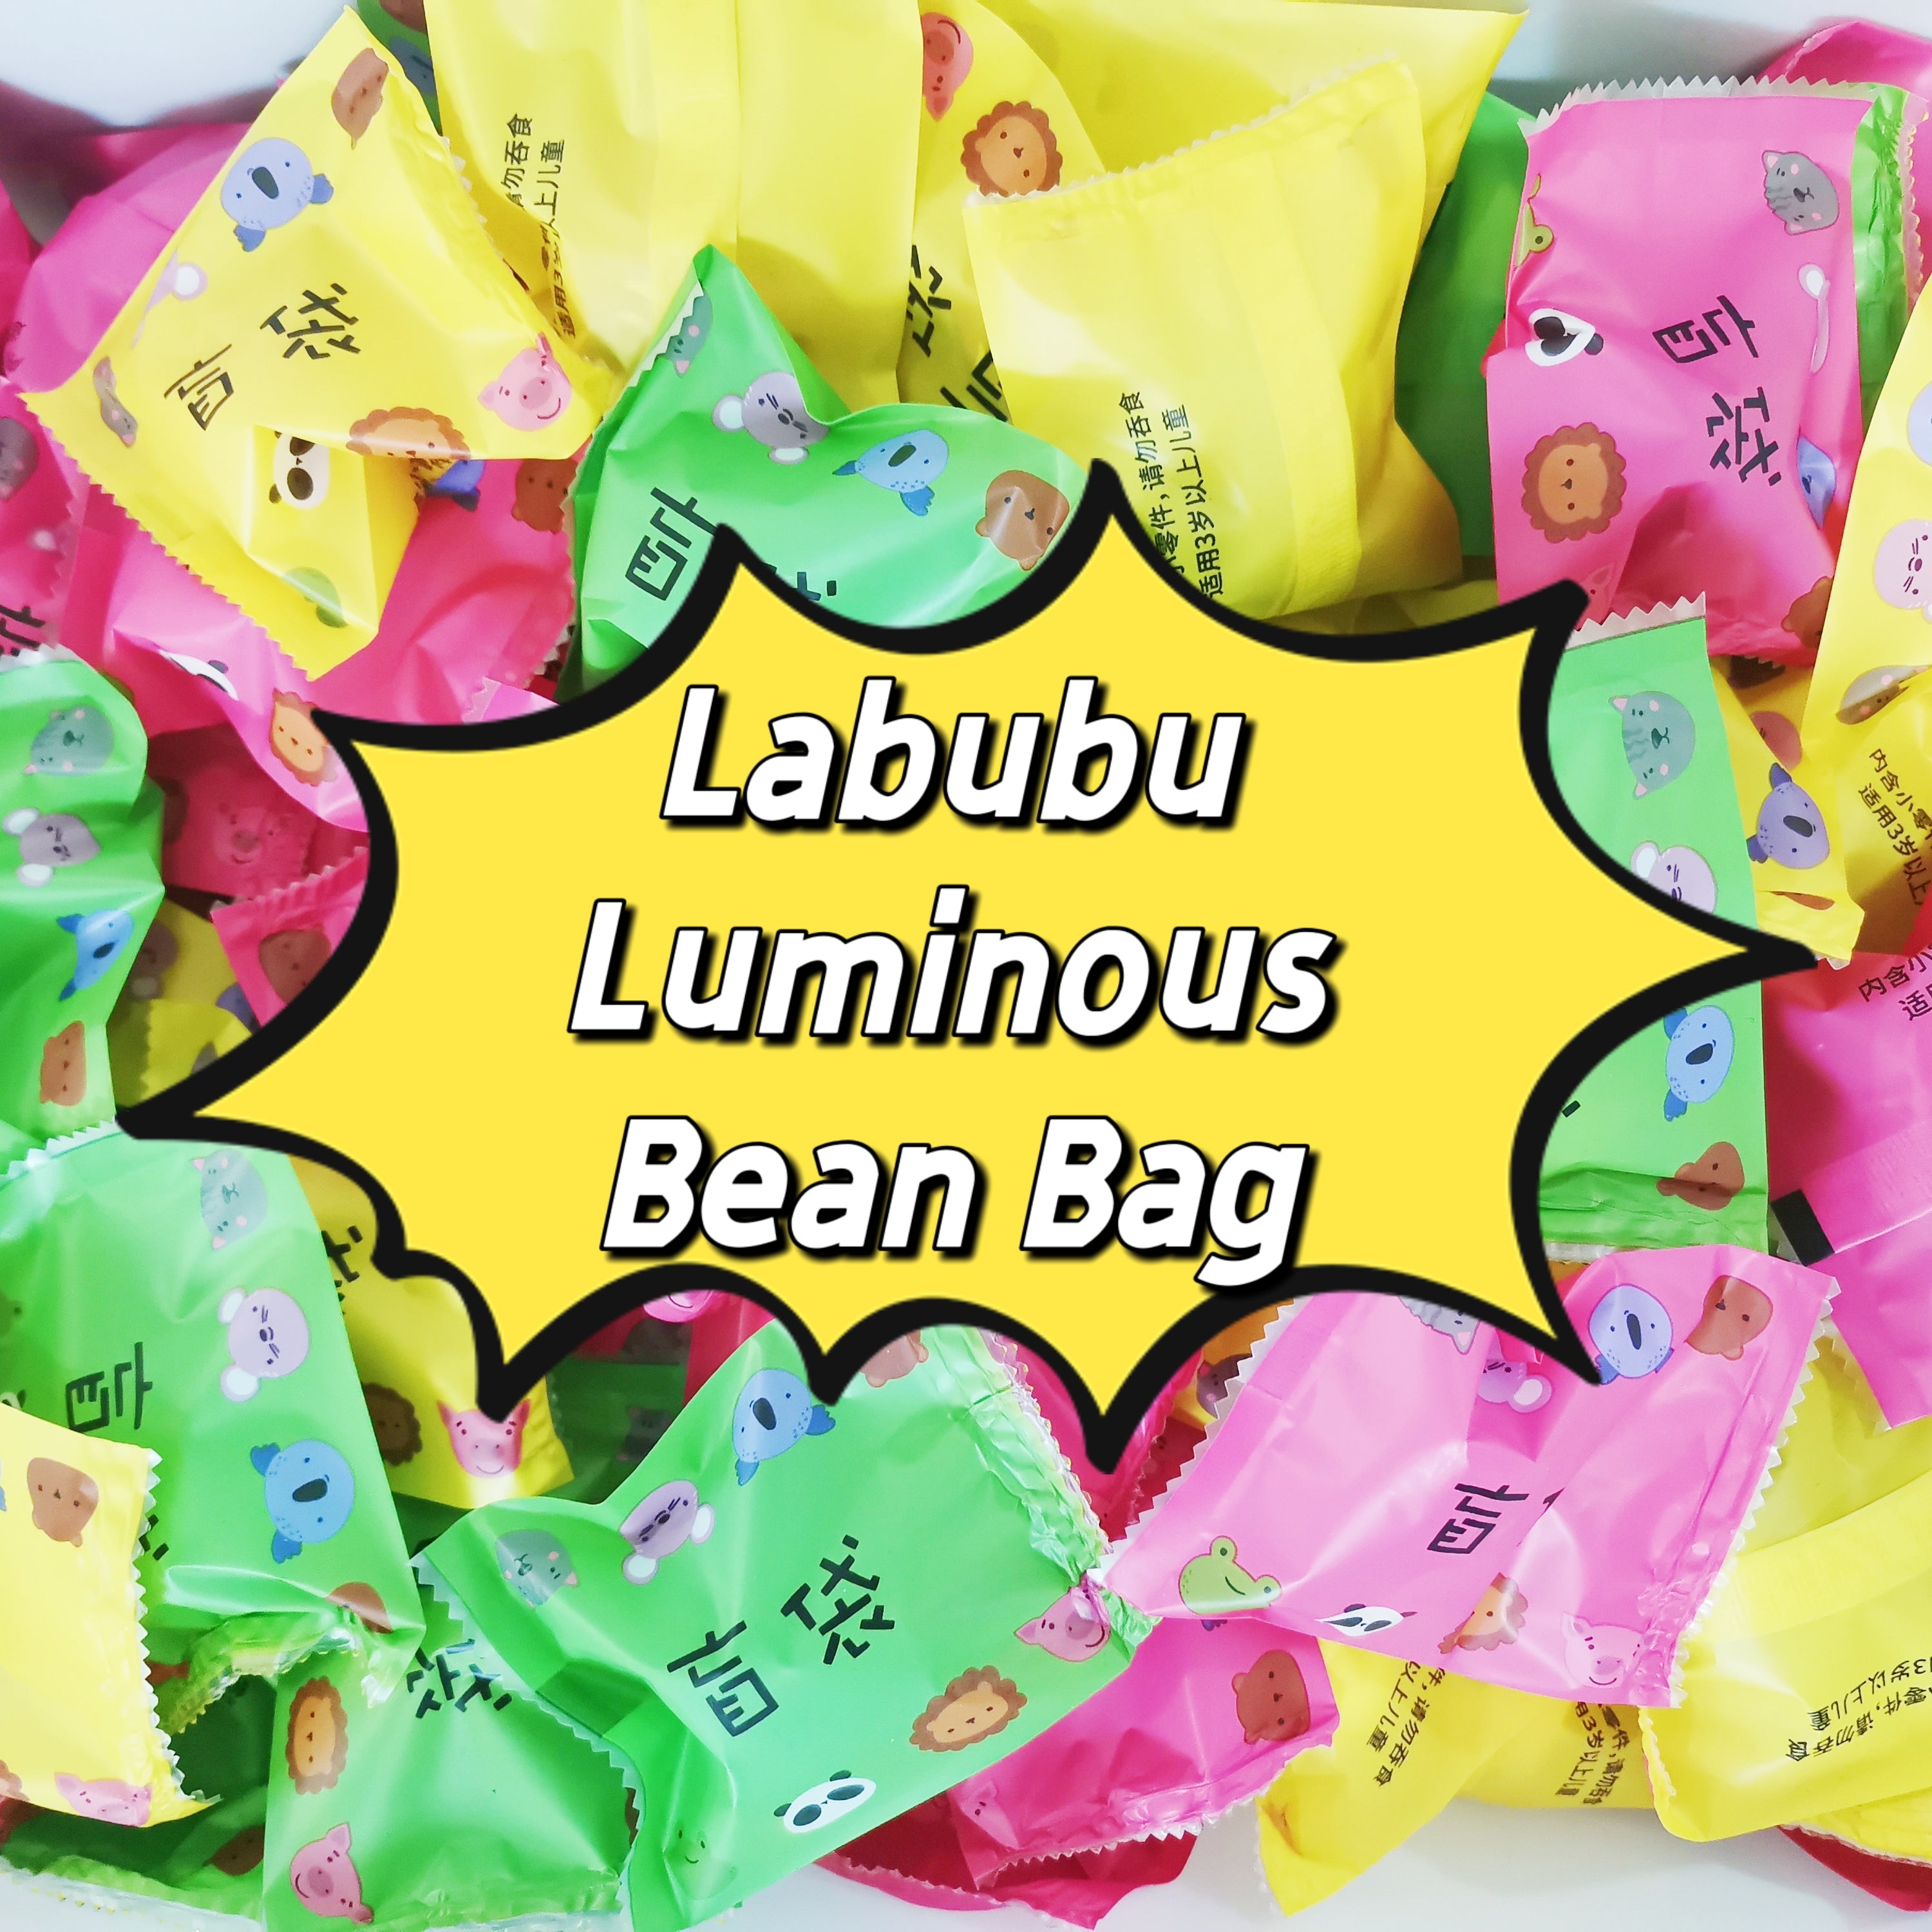 Labubu Luminous Bean Blind Bag DingDing Bag-Open in Livestream